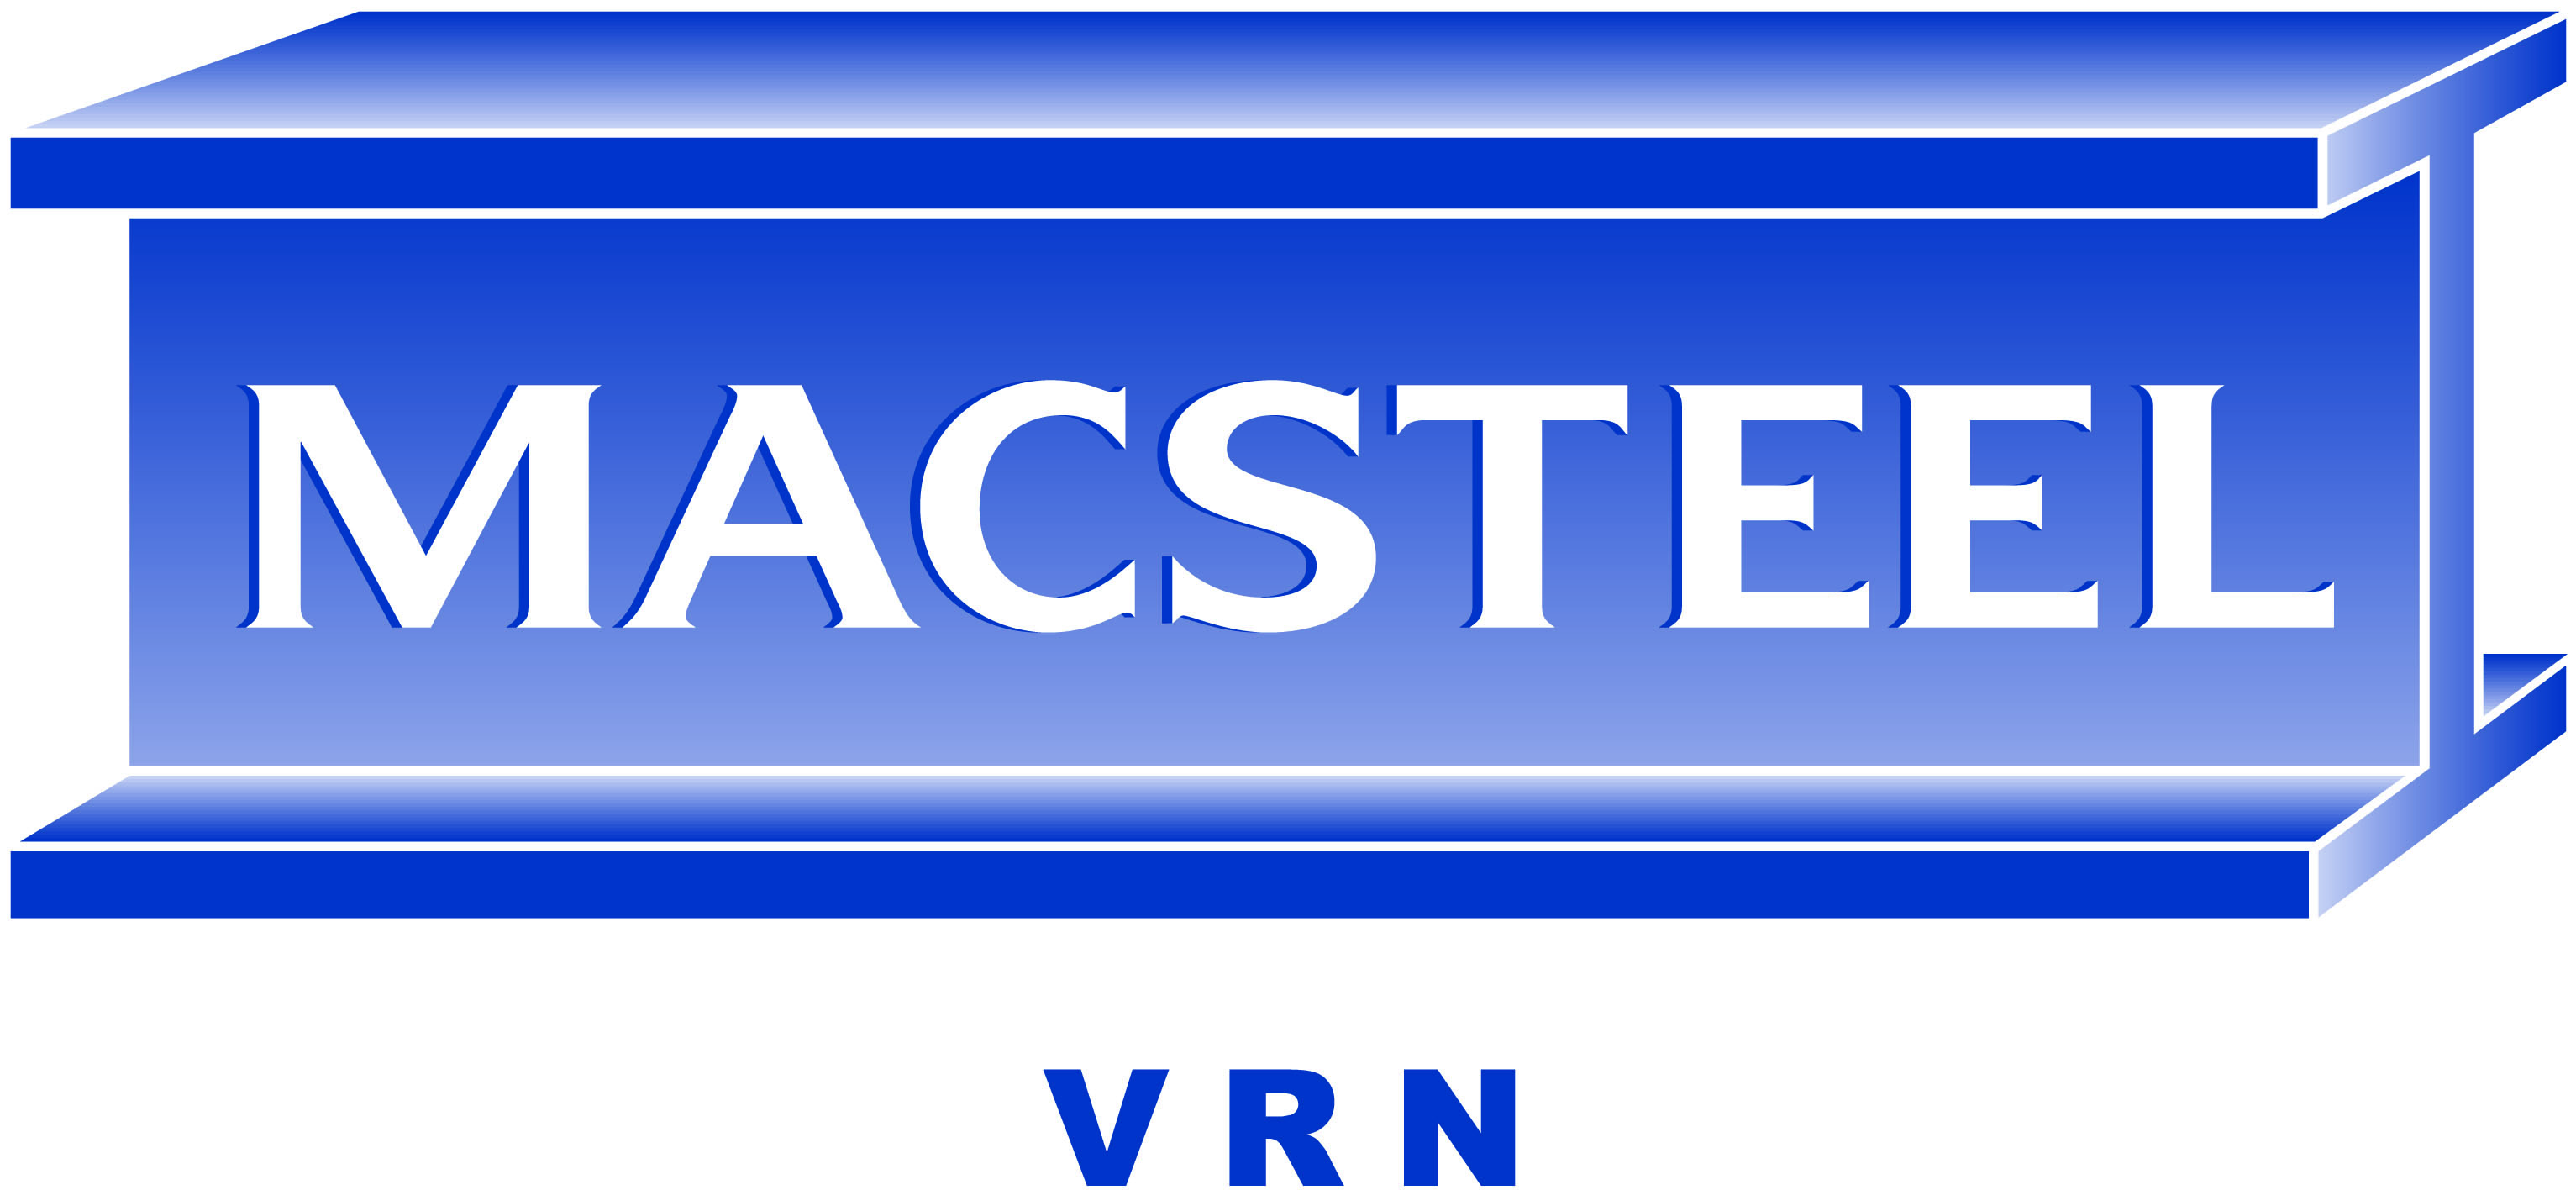 Macsteel VRN - Rustenburg logo